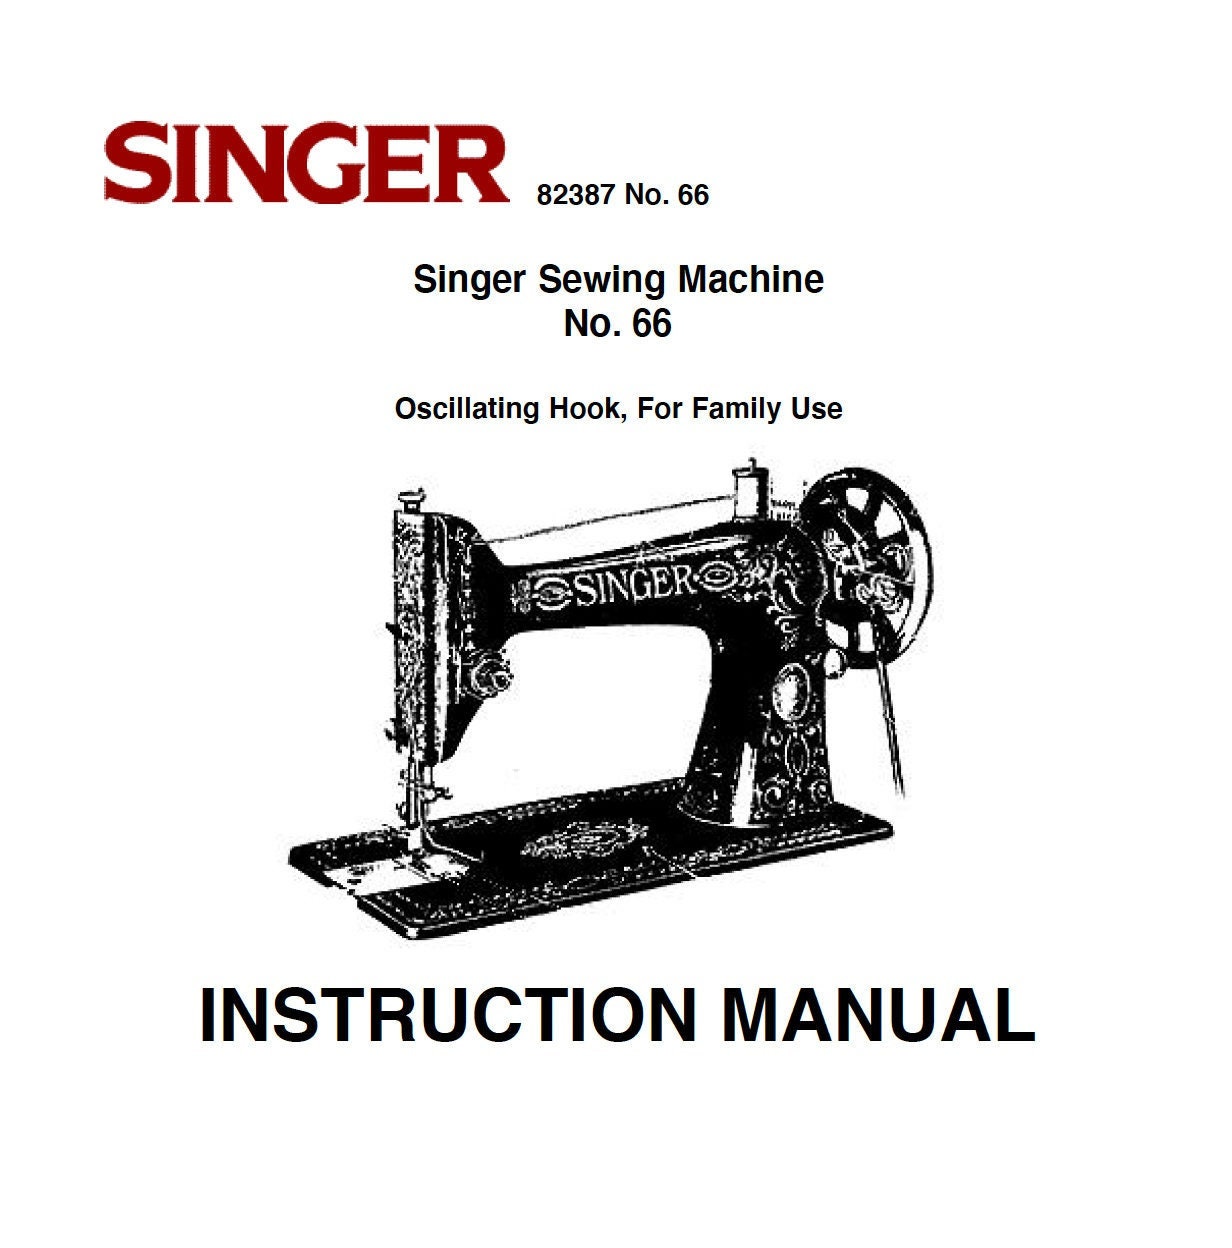 Singer Sewing Machine Parts 